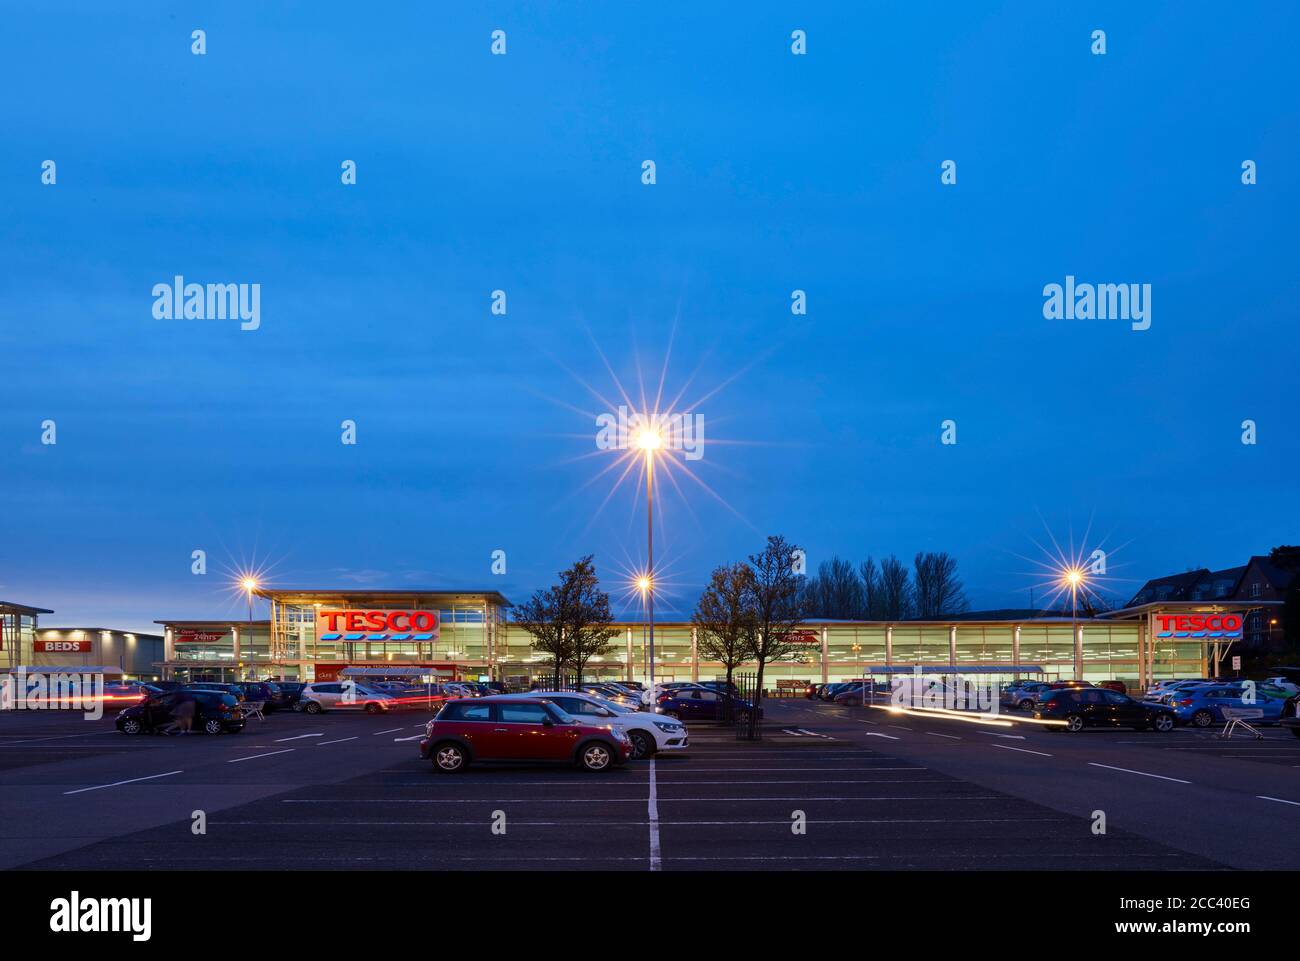 Tesco car park. Abbey Retail Park, Belfast, Belfast, Ireland. Architect: N/A, 2019. Stock Photo